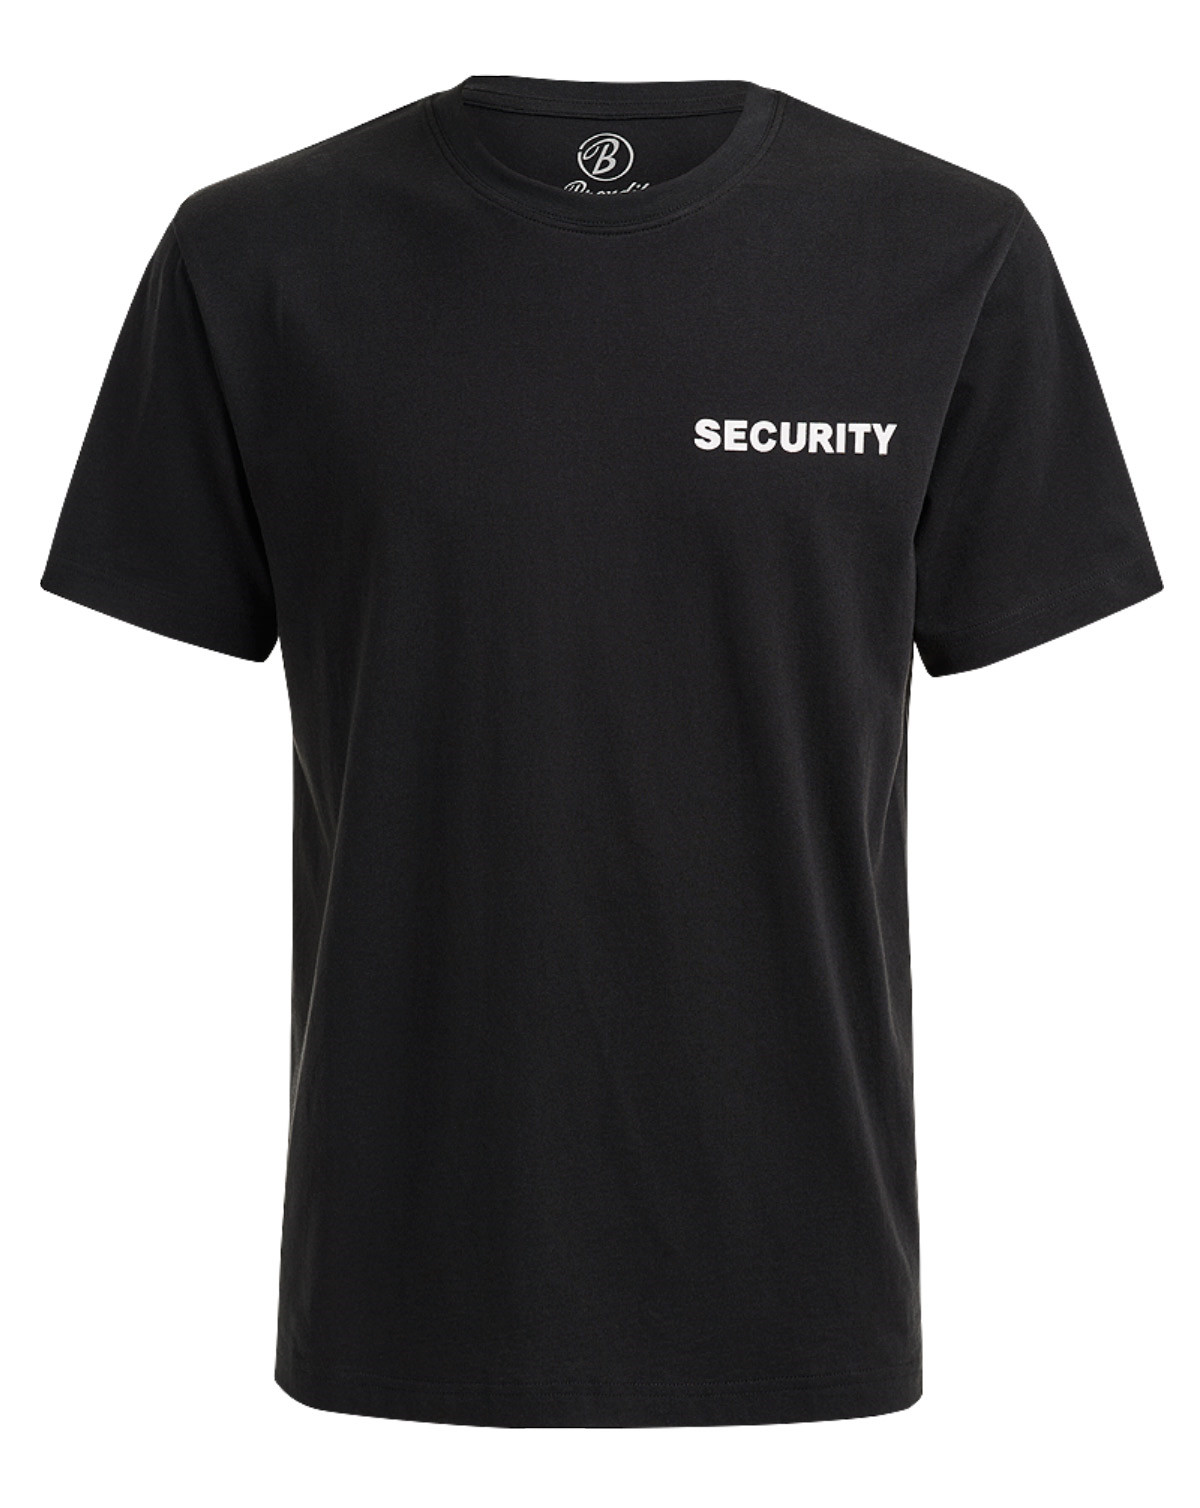 Brandit Security T-shirt (Sort, L)